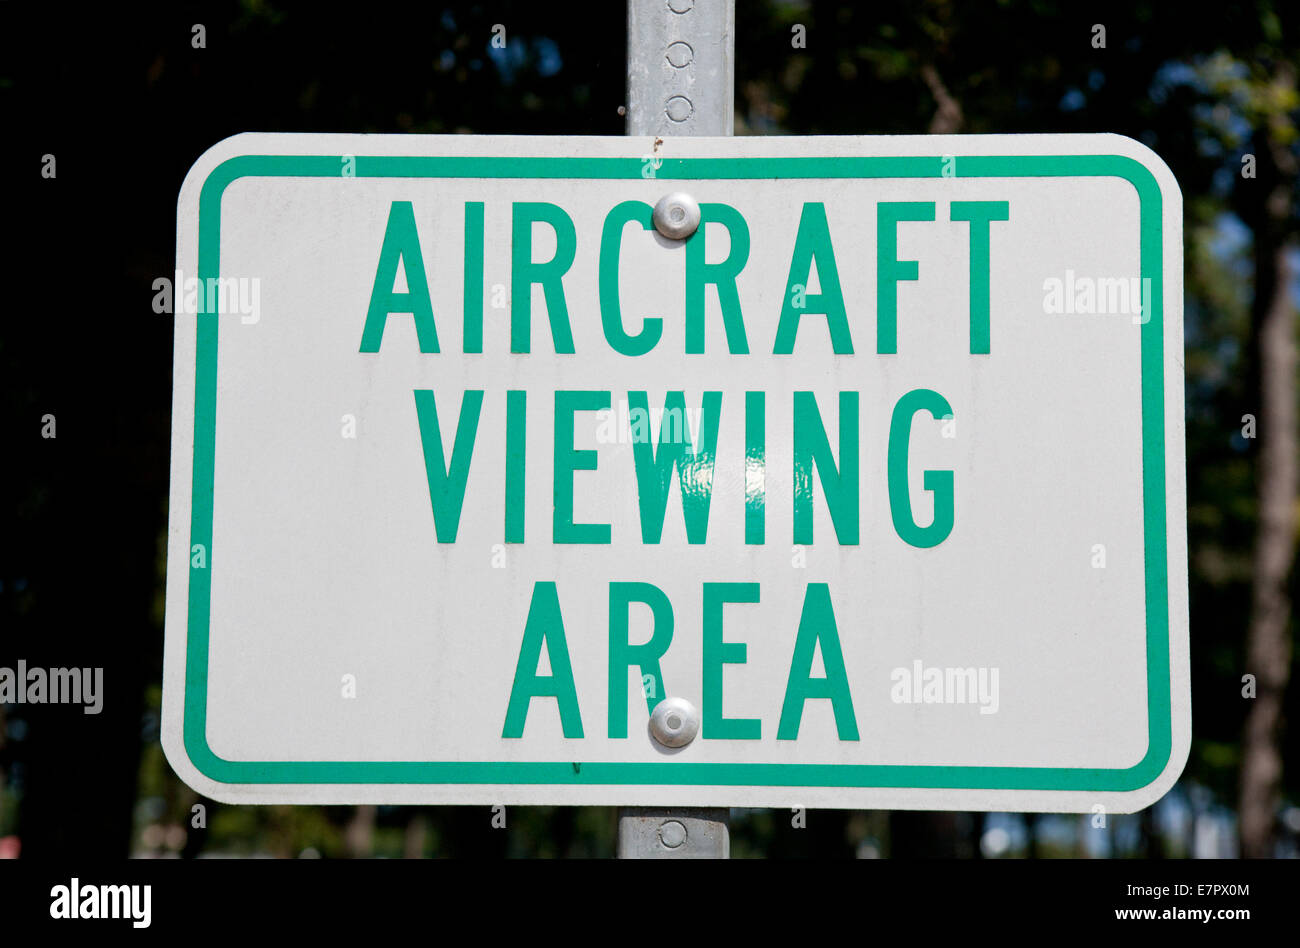 Sign indicating an aircraft viewing area. Stock Photo